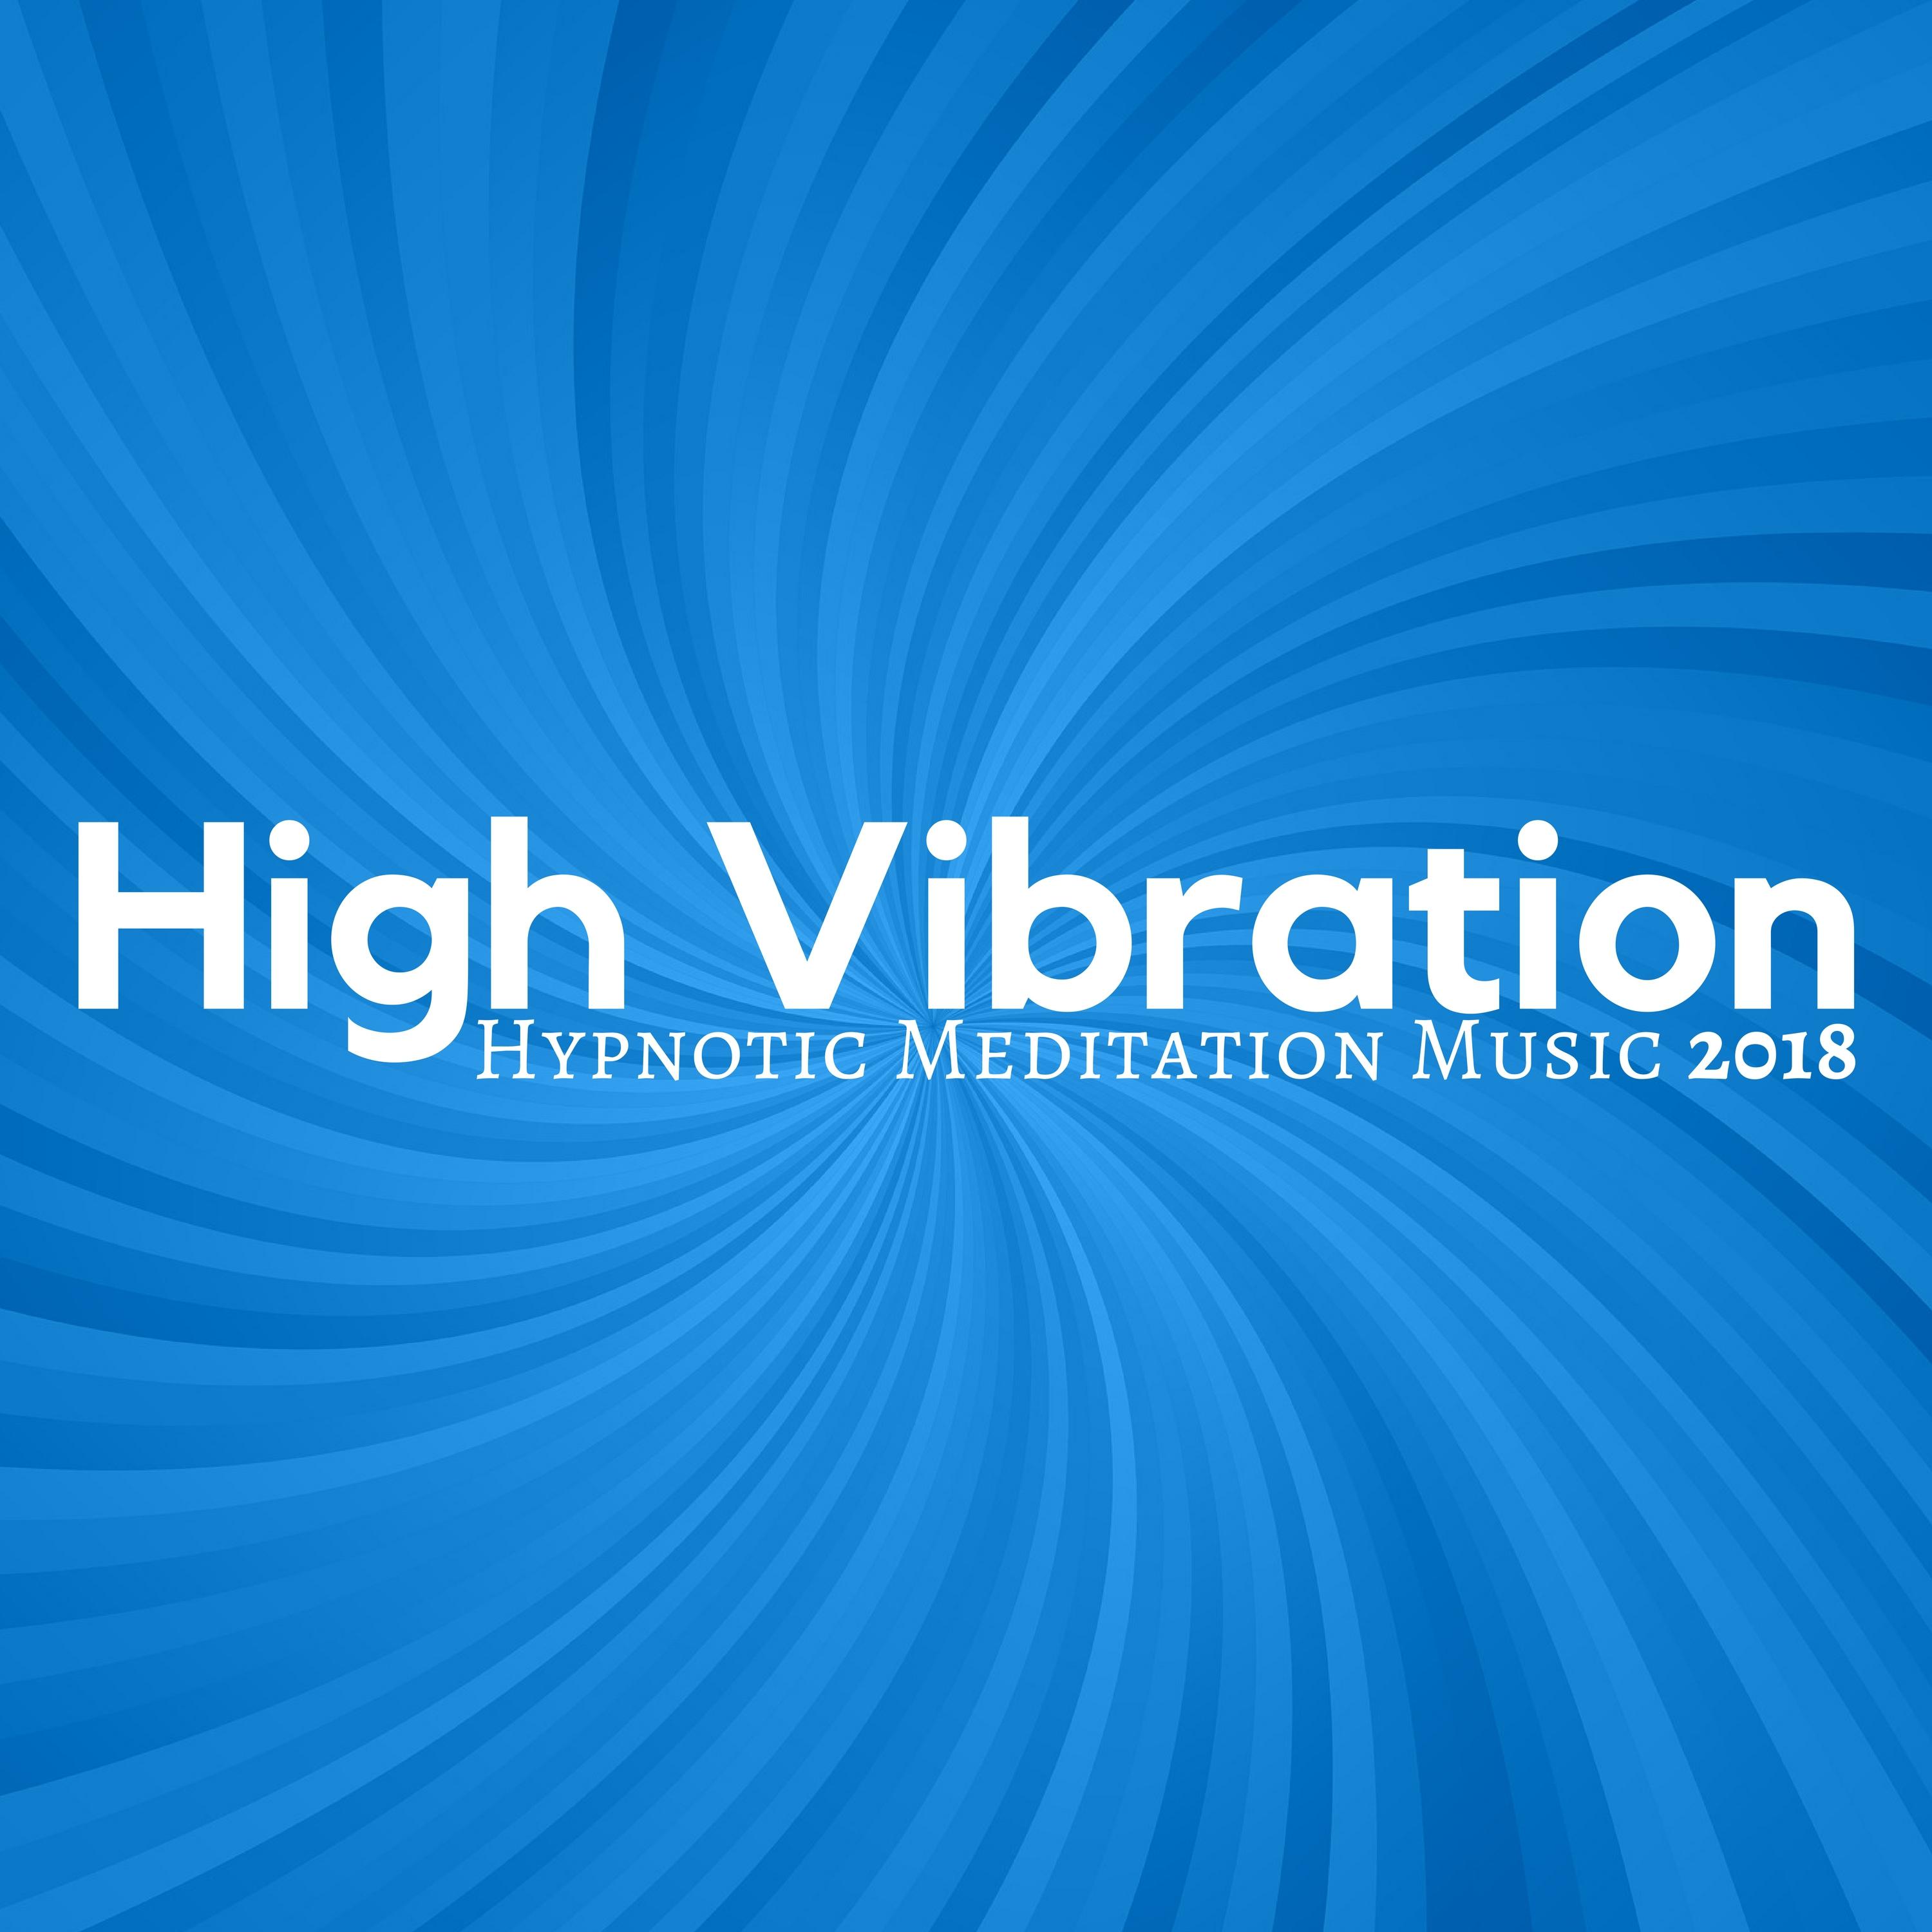 High Vibration - Hypnotic Meditation Music 2018